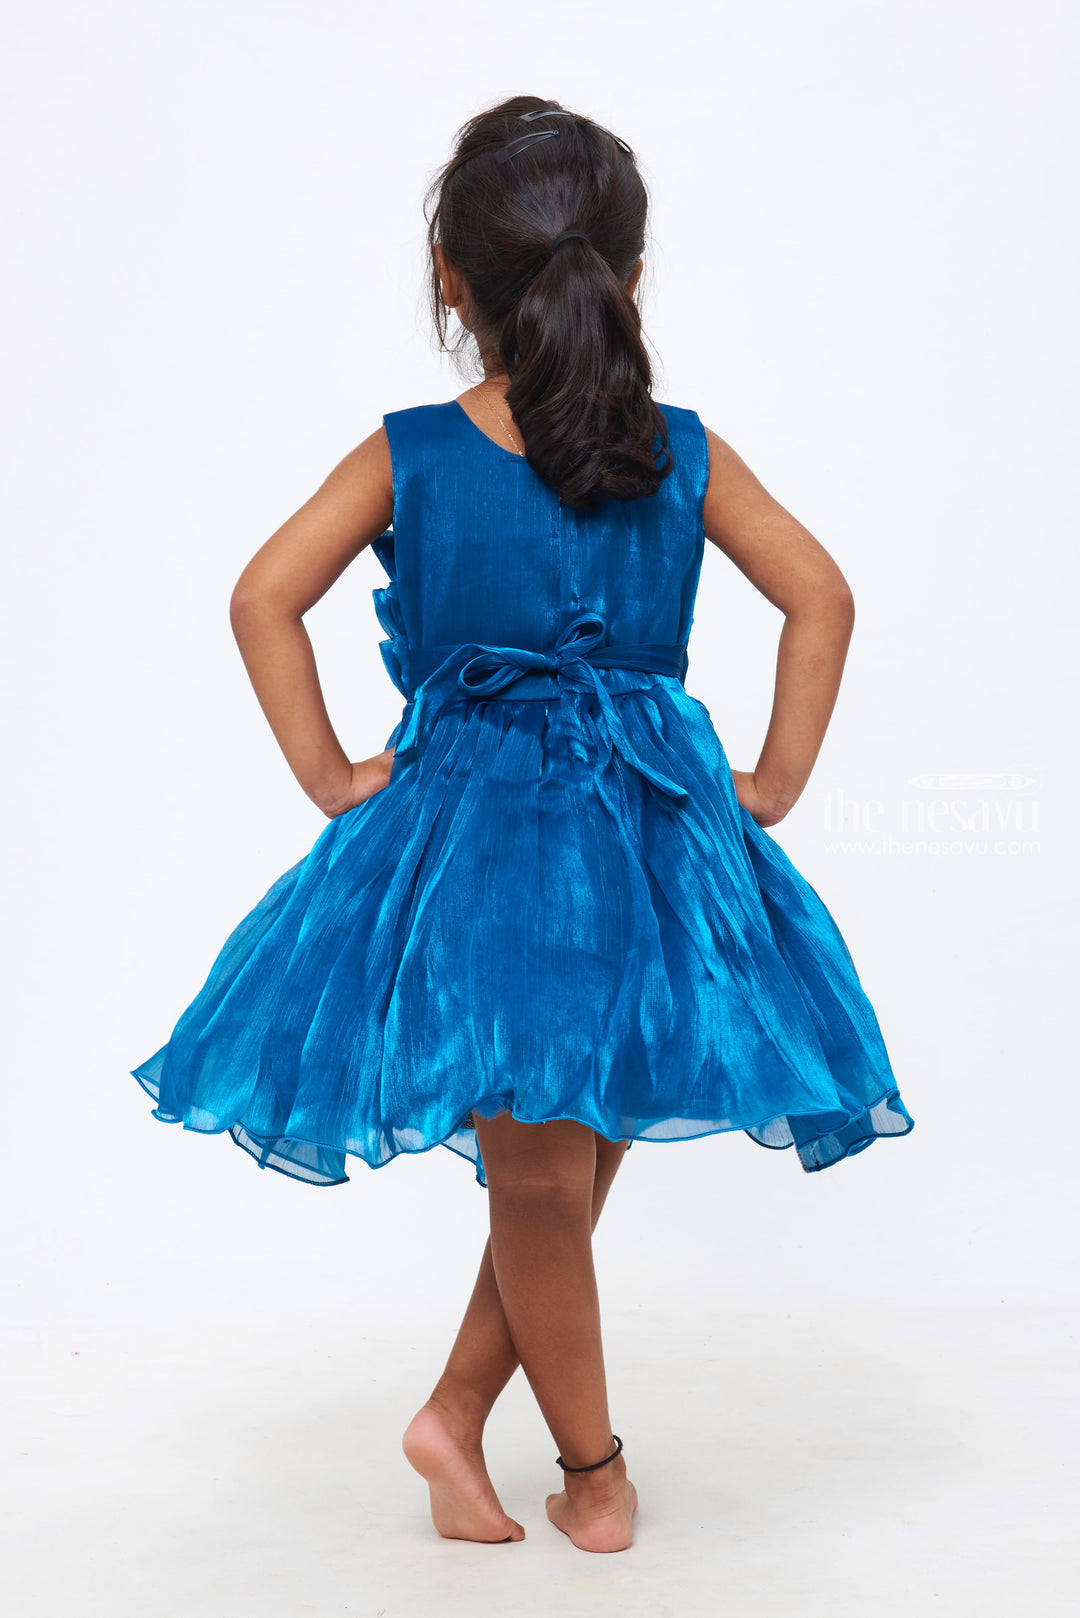 The Nesavu Girls Fancy Party Frock Azure Elegance: Girls Deep Blue Tulle Dress with Rosette Embellishments Nesavu Glam Up Her Wardrobe | Must-Have Party Frocks for Girls | The Nesavu